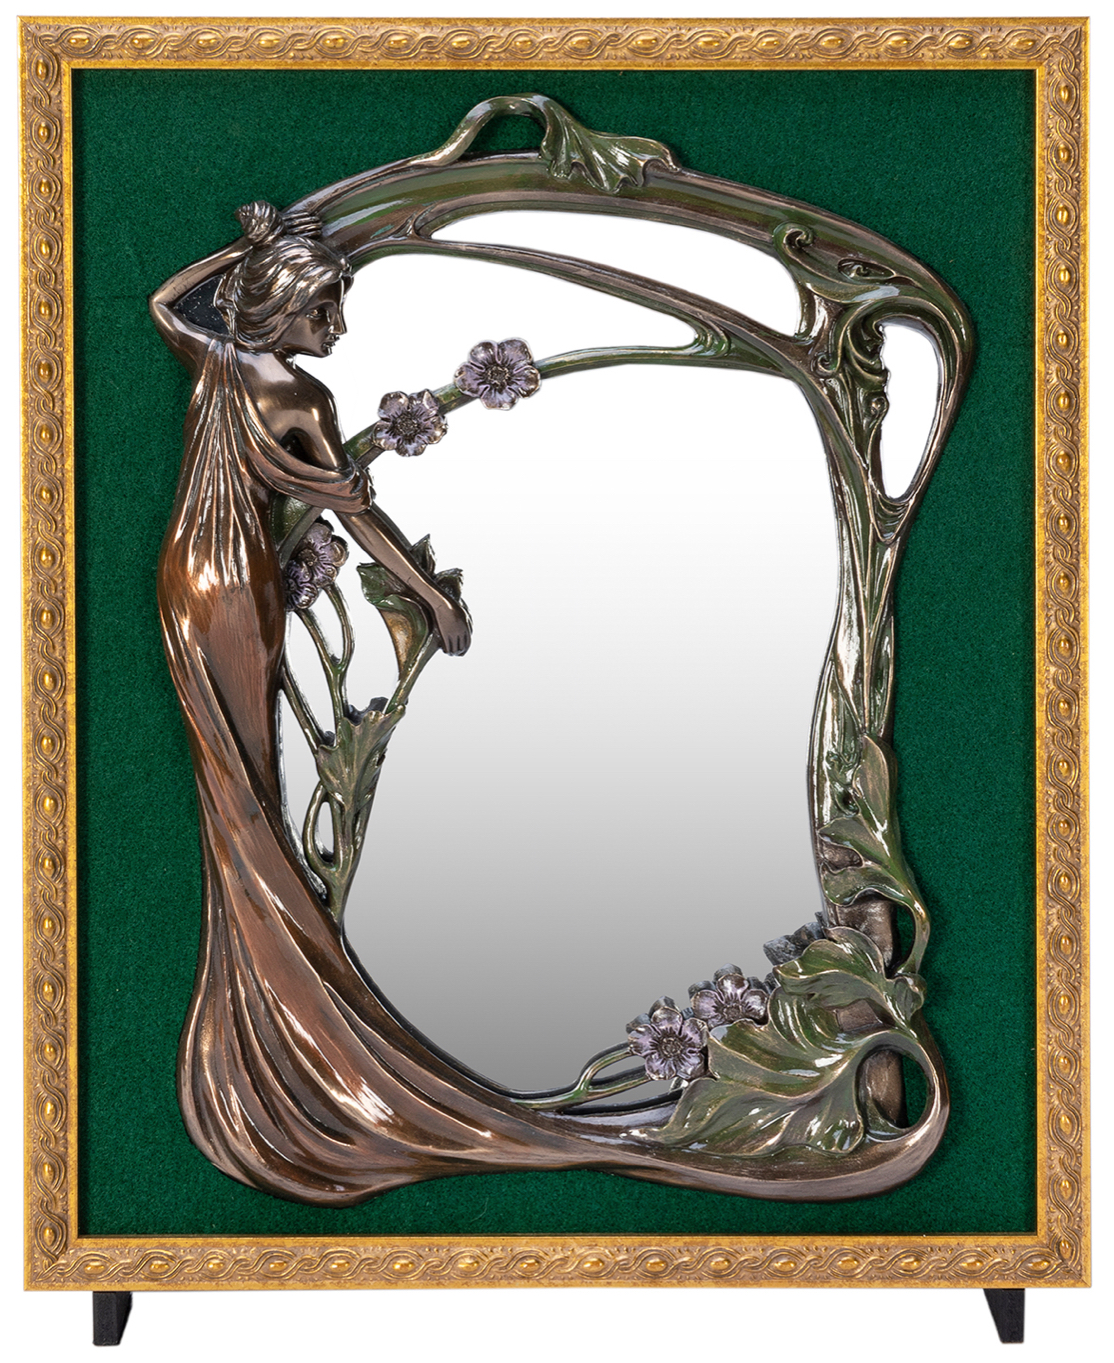 A La Glace Liquide vanishing mirror device by Richard Gerlitz, est. $2,000-$4,000